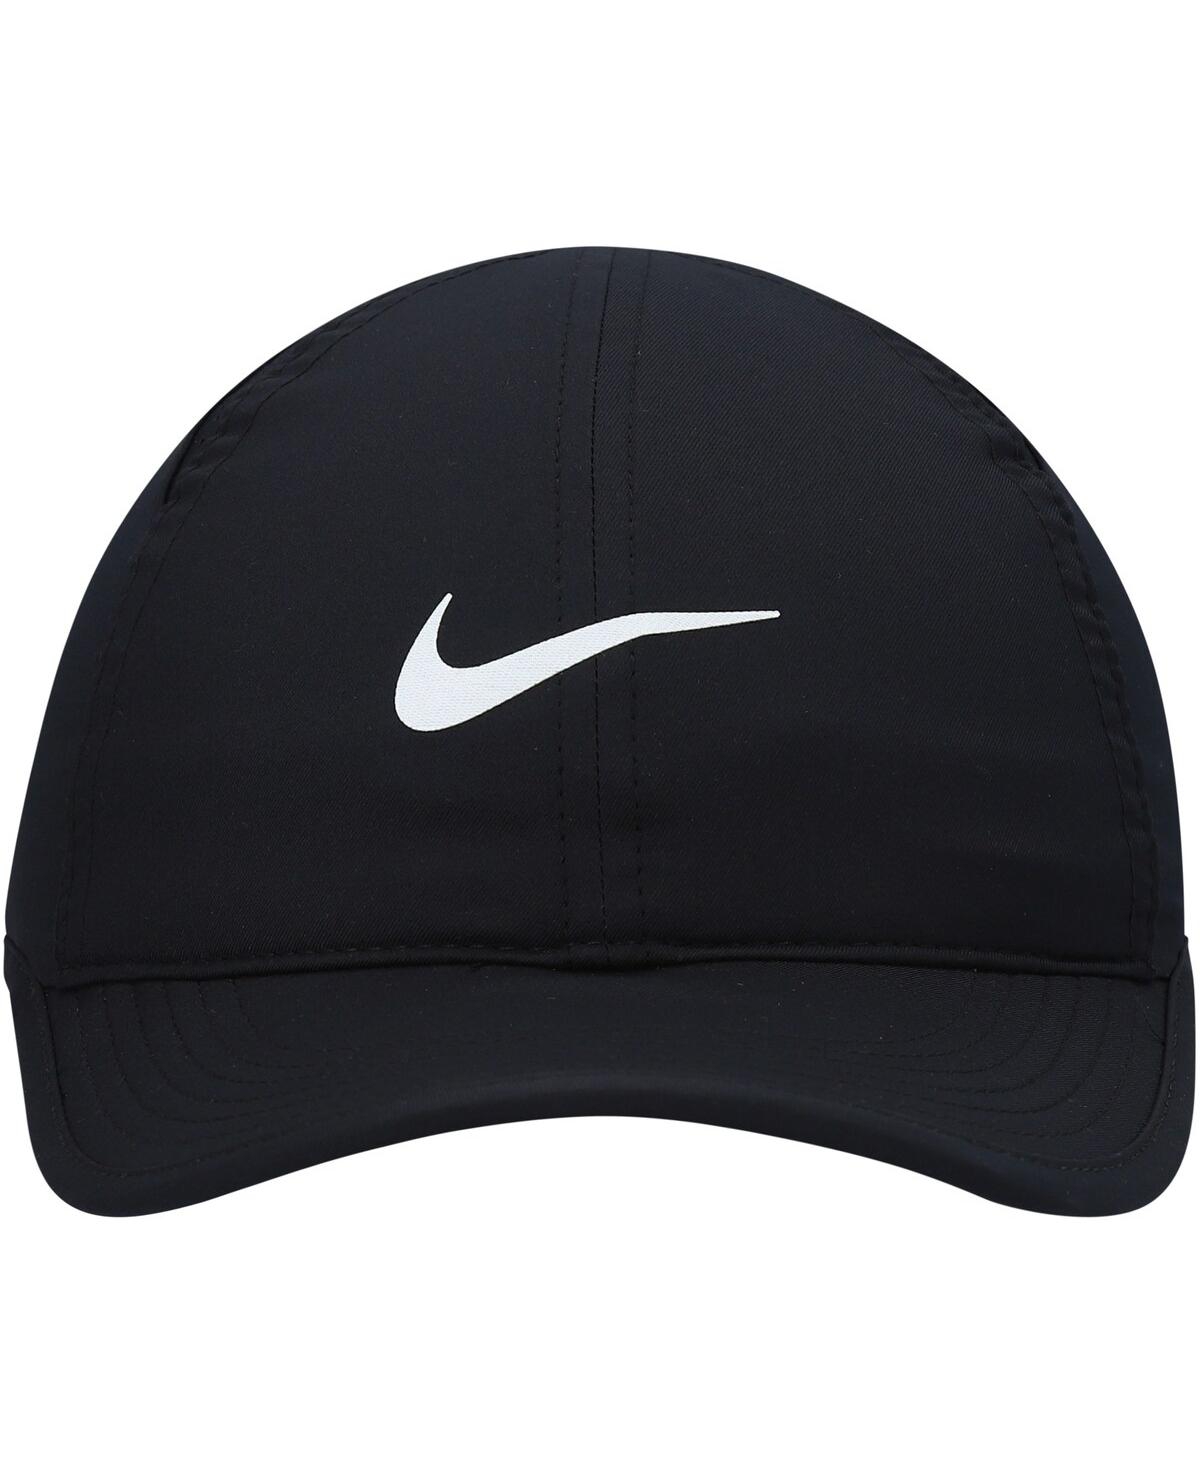 Shop Nike Boys Black Featherlight Performance Adjustable Hat